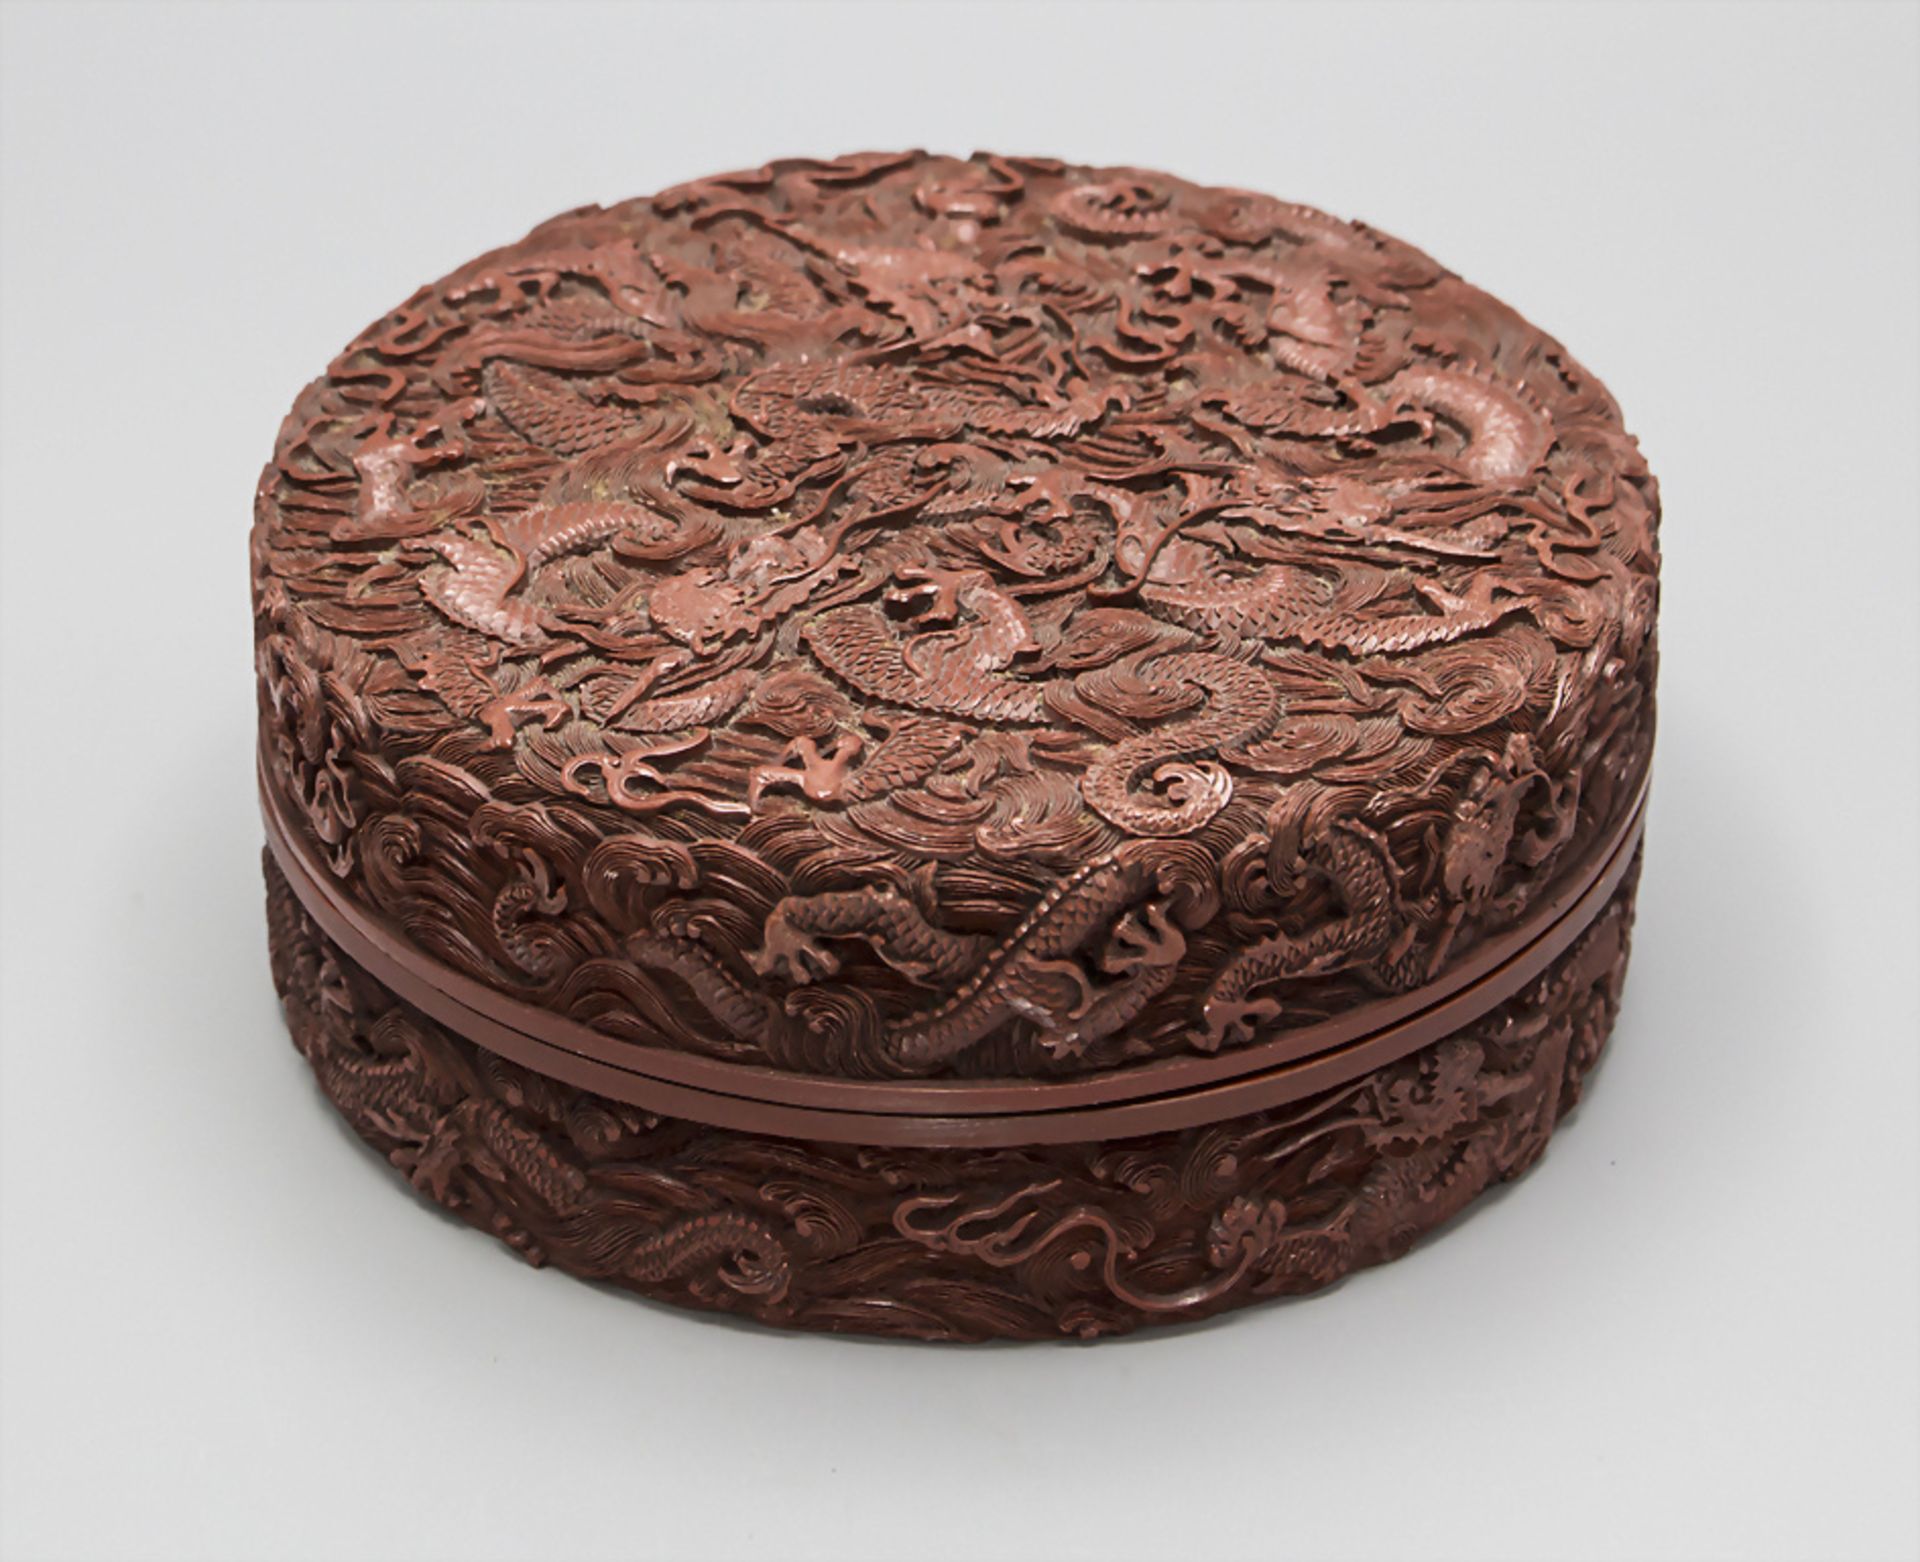 Deckeldose mit Drachenreliefdekor / A lidded box with dragon relief decoration, China - Image 2 of 8